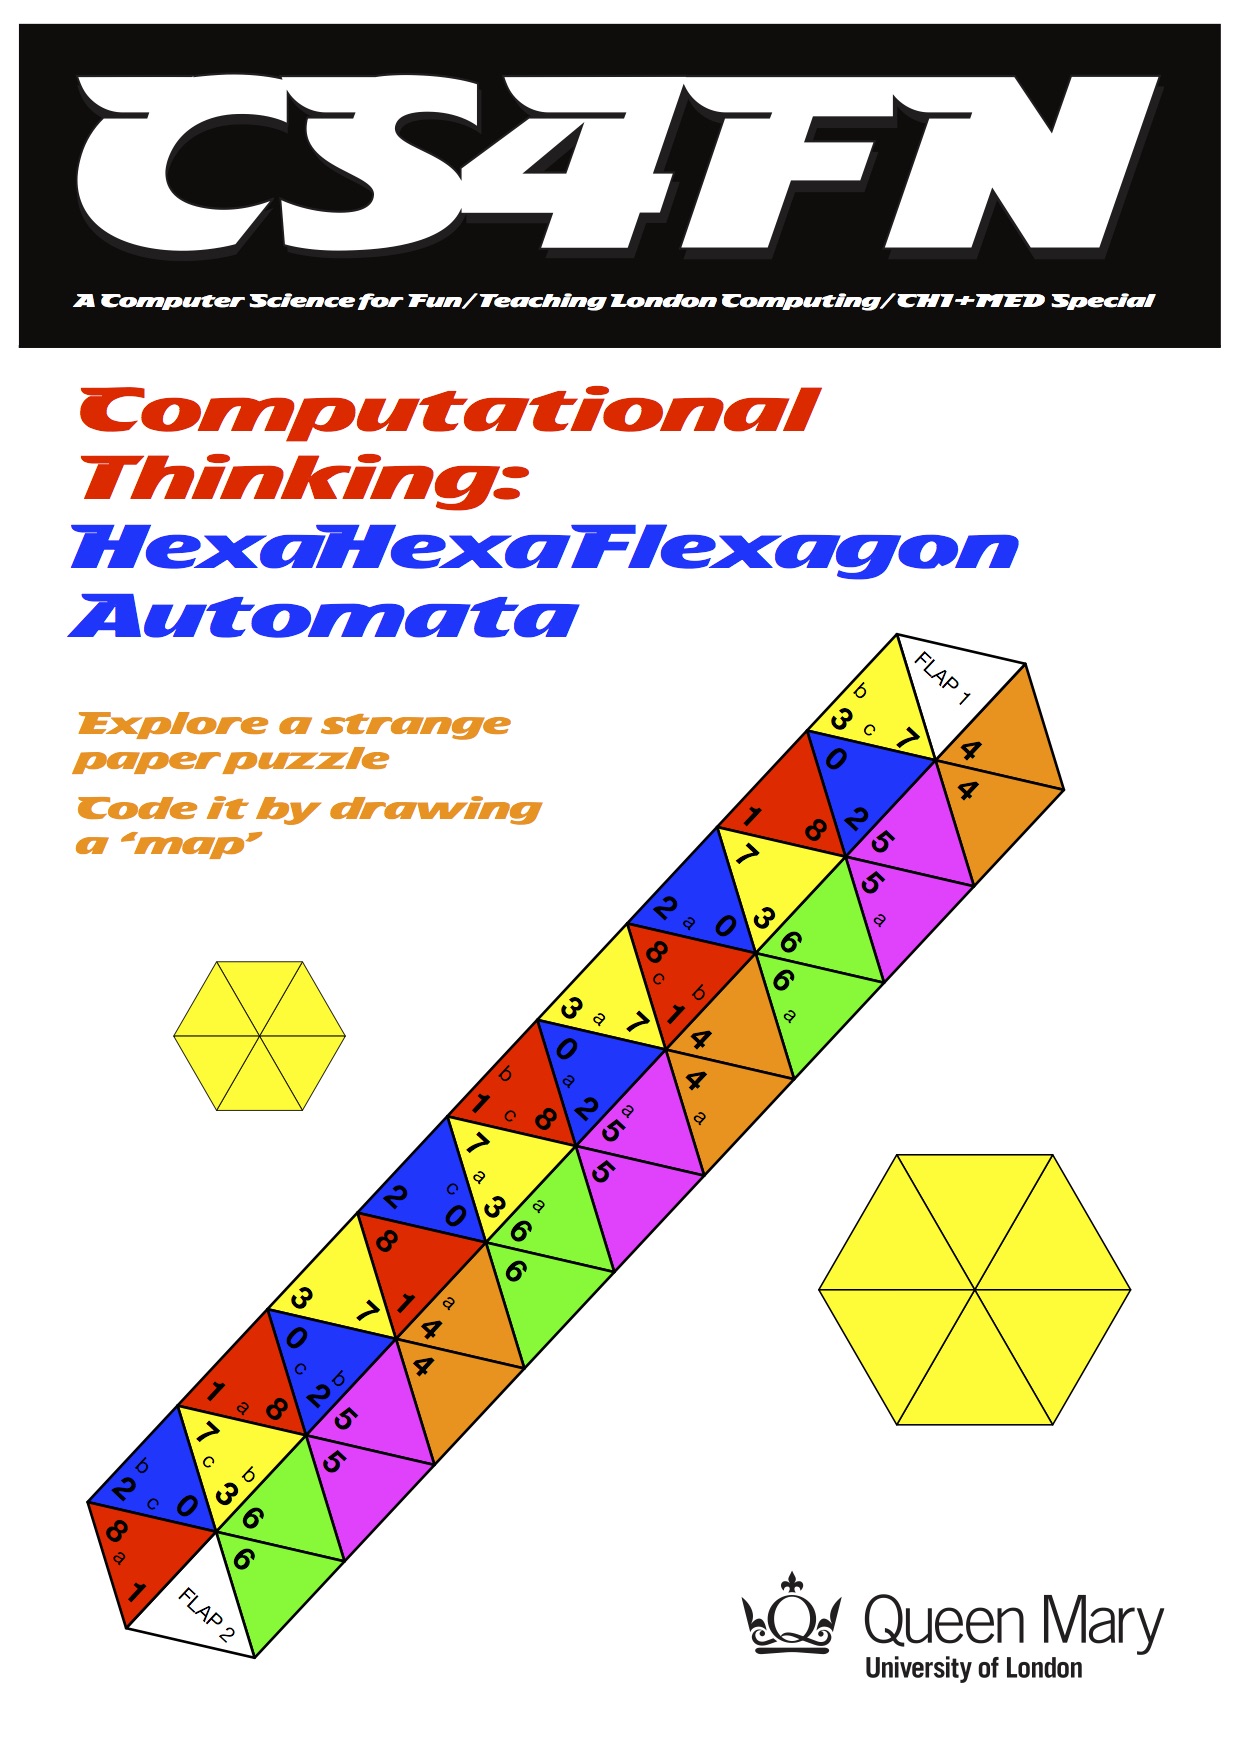 The cover of the Hexahexaflexagon Automata Booklet